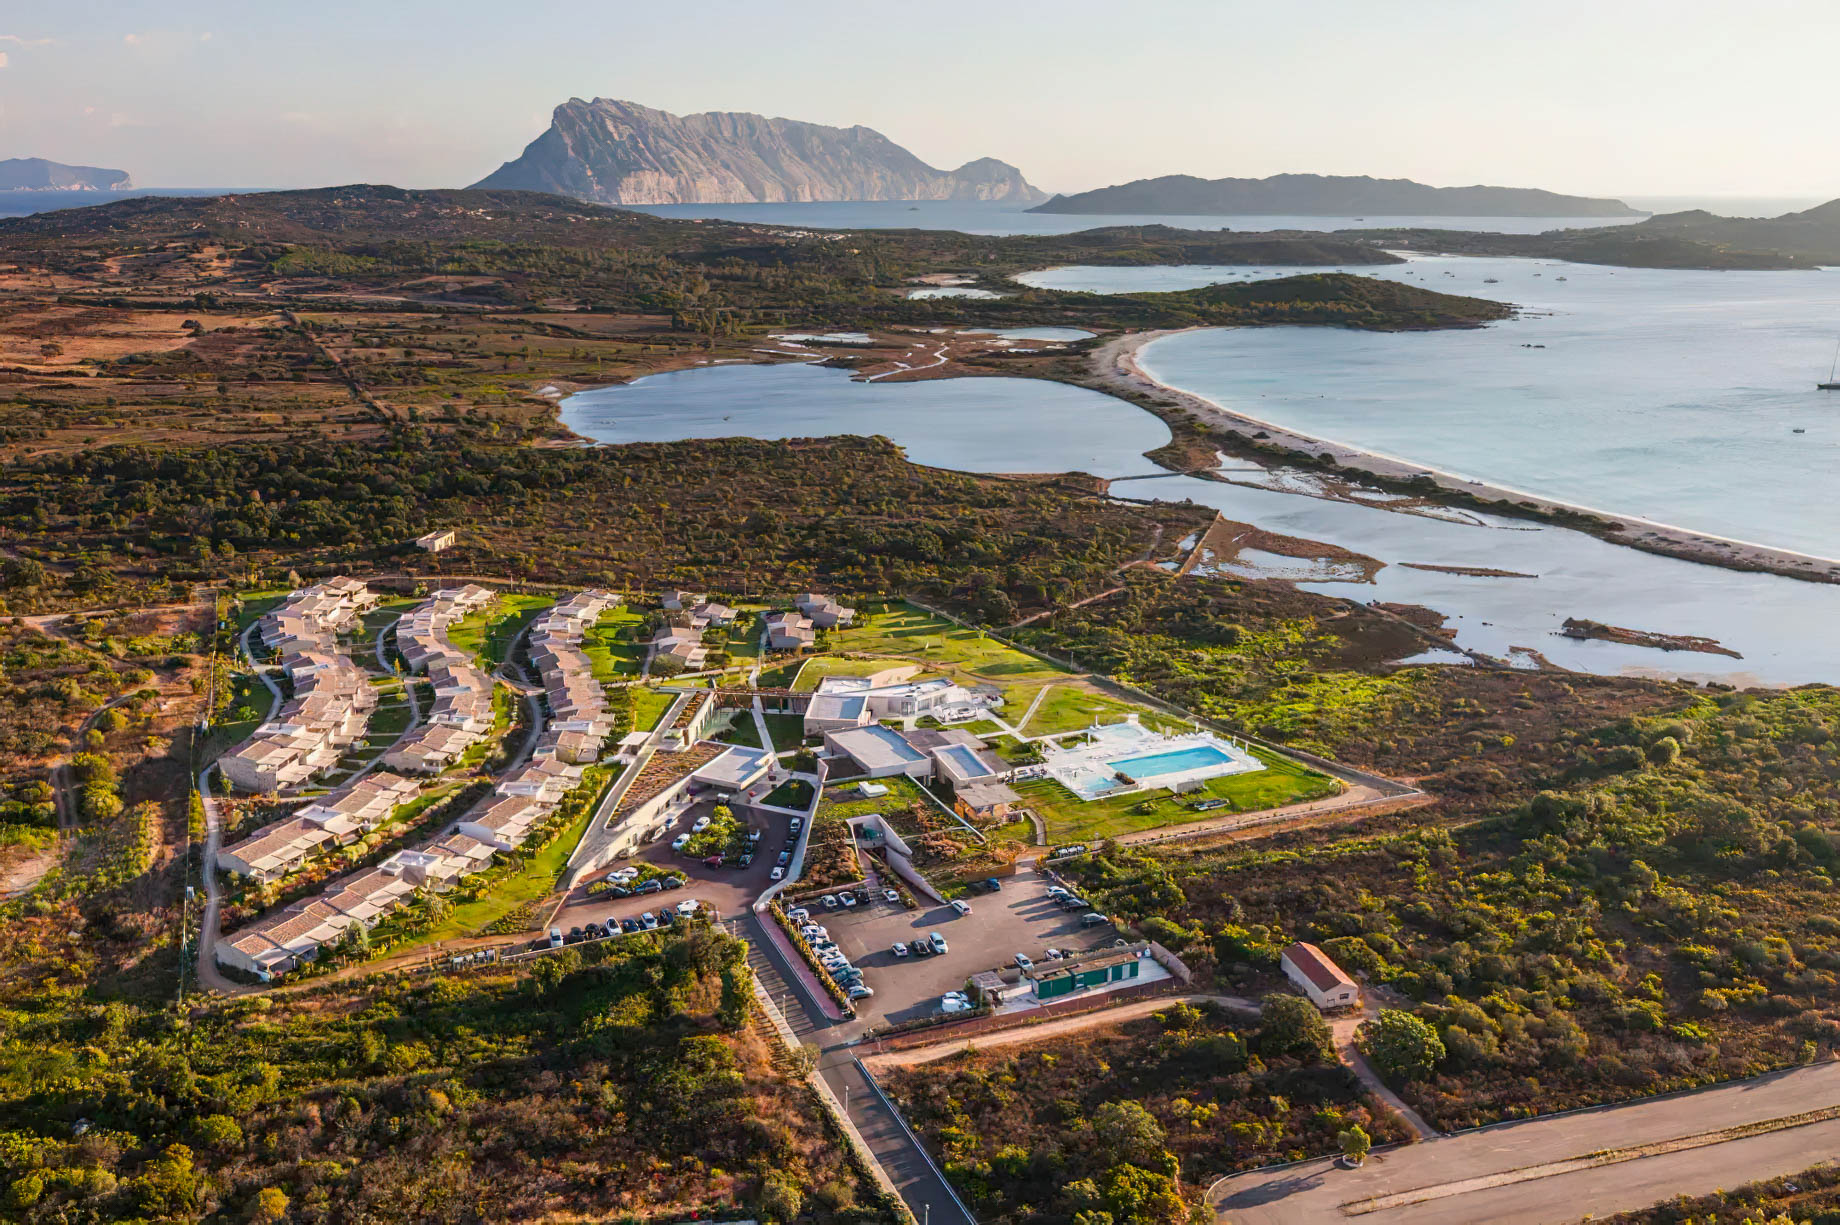 Baglioni Resort Sardinia – San Teodoro, Sardegna, Italy – Resort Aerial View